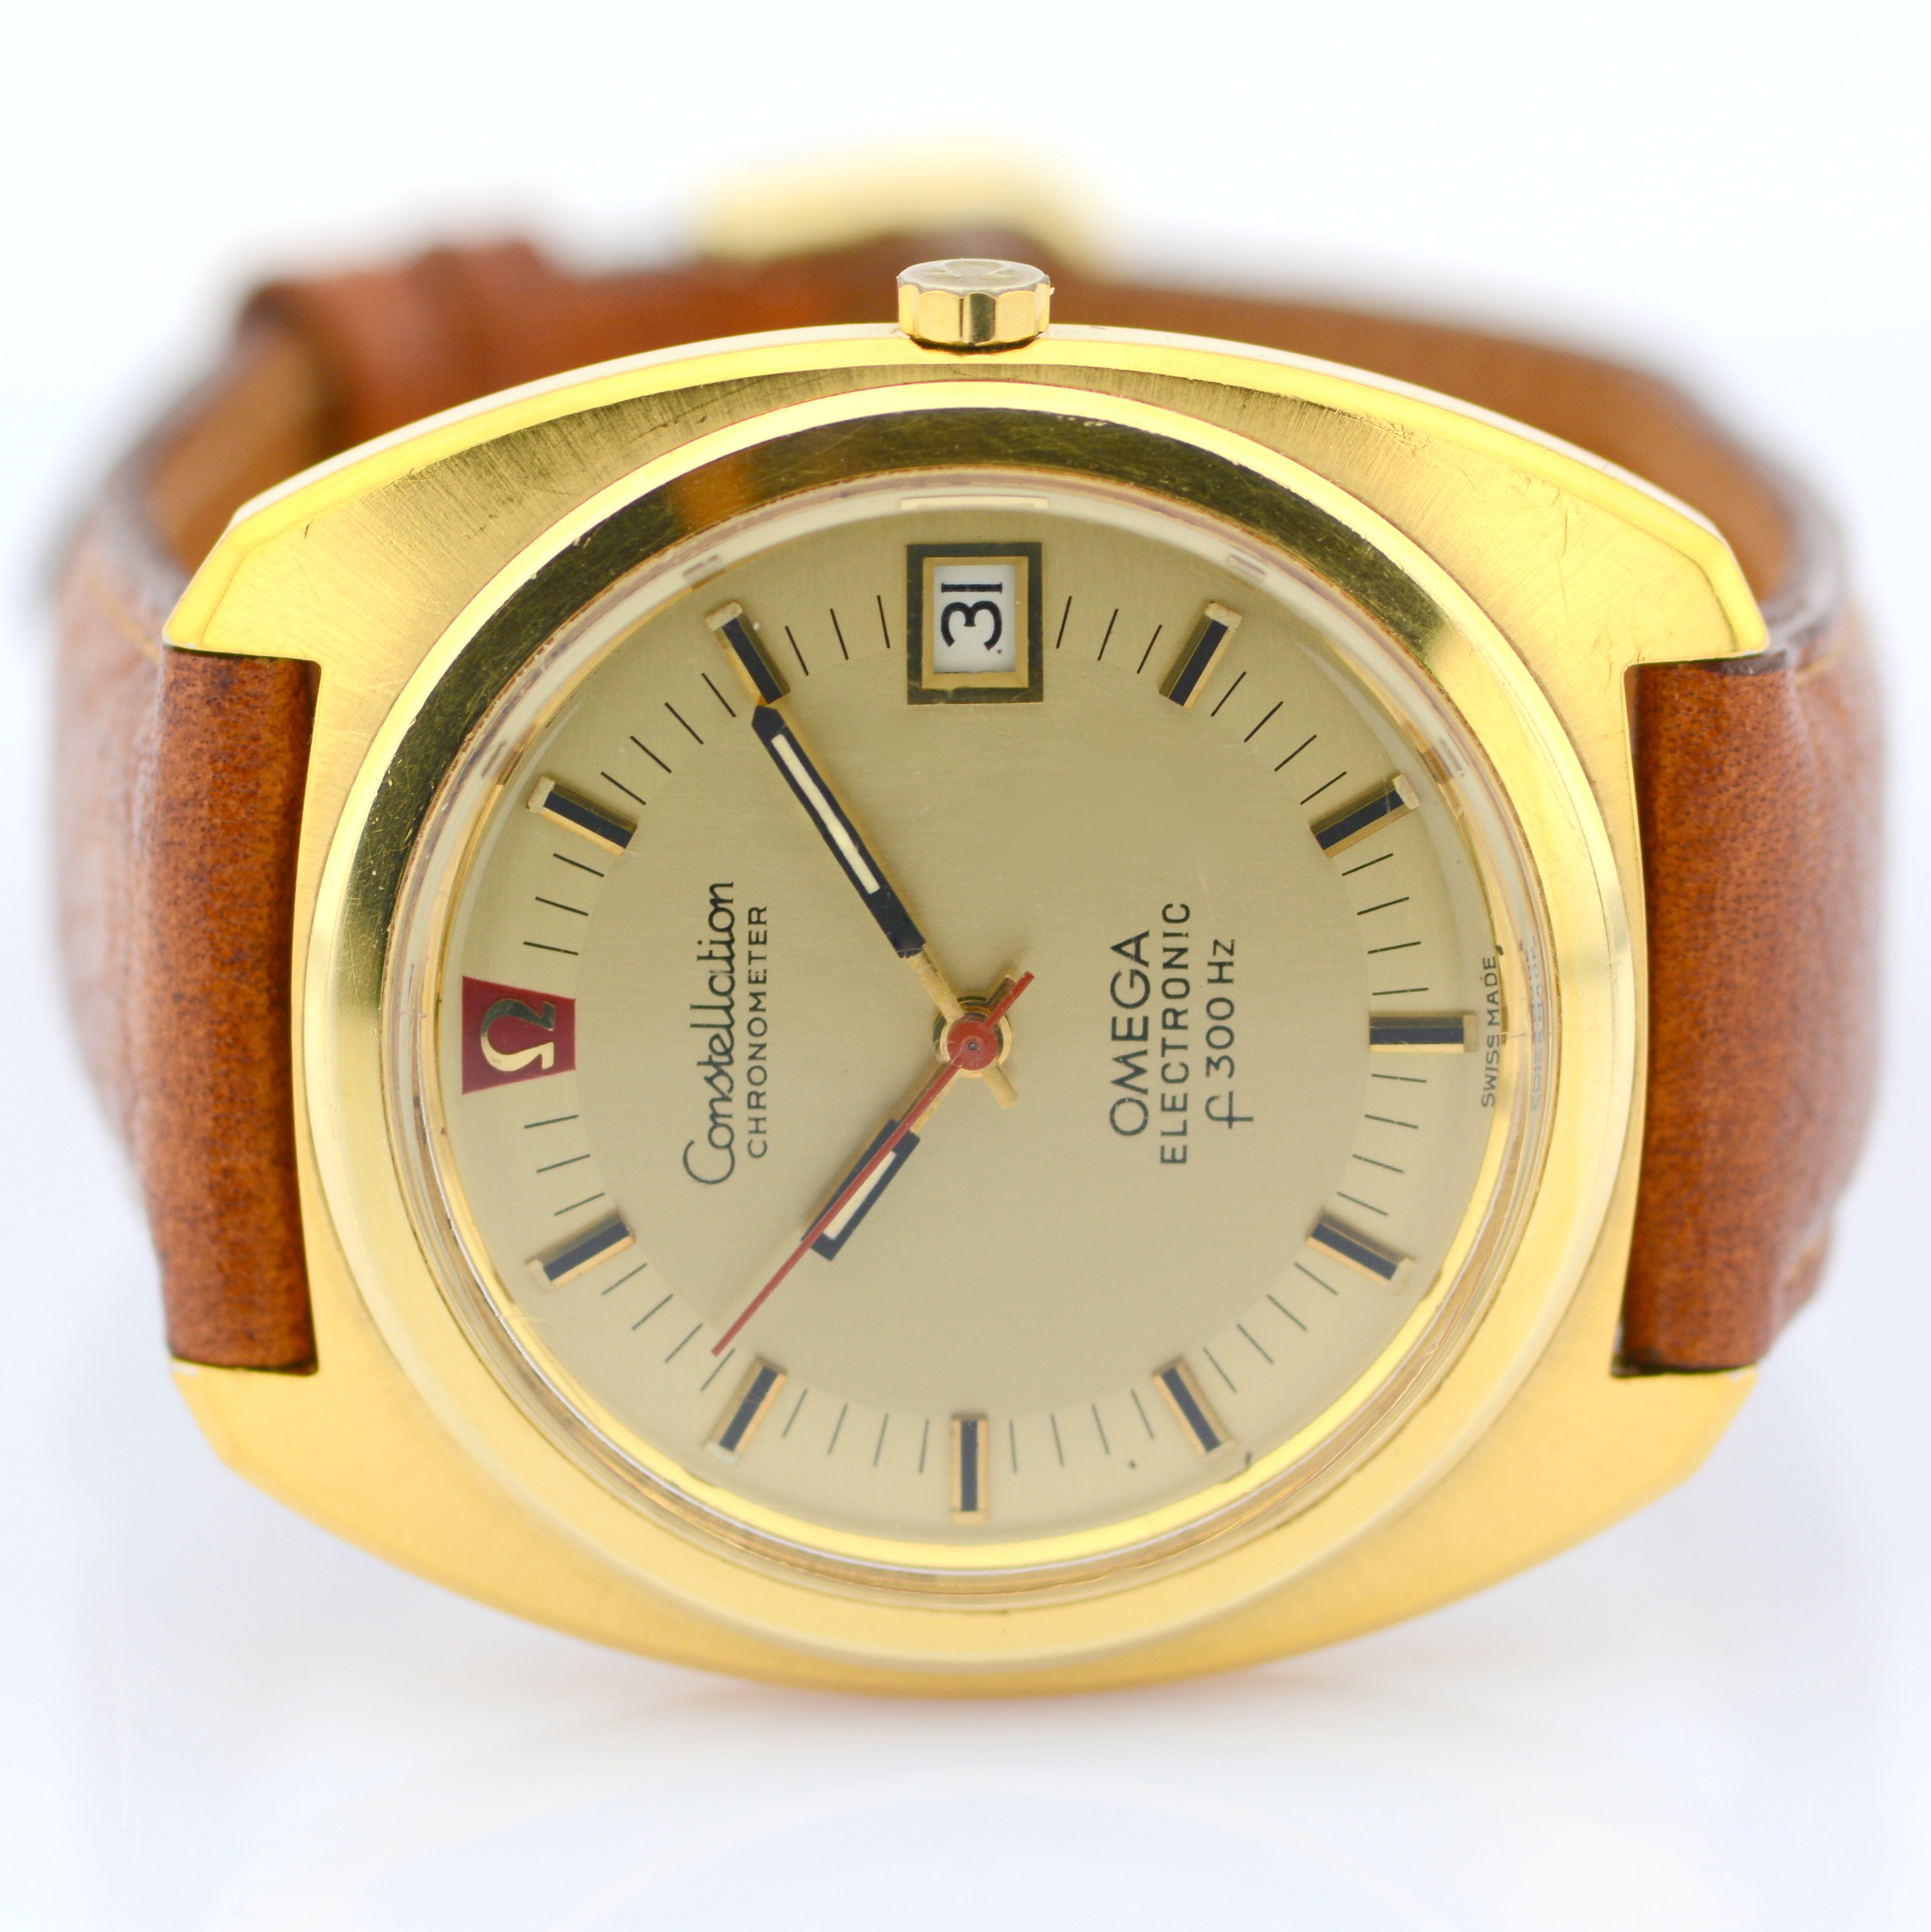 Omega / Constellation Chronometer Electronic f300Hz - Gentlmen's Gold/Steel Wrist Watch - Image 6 of 6